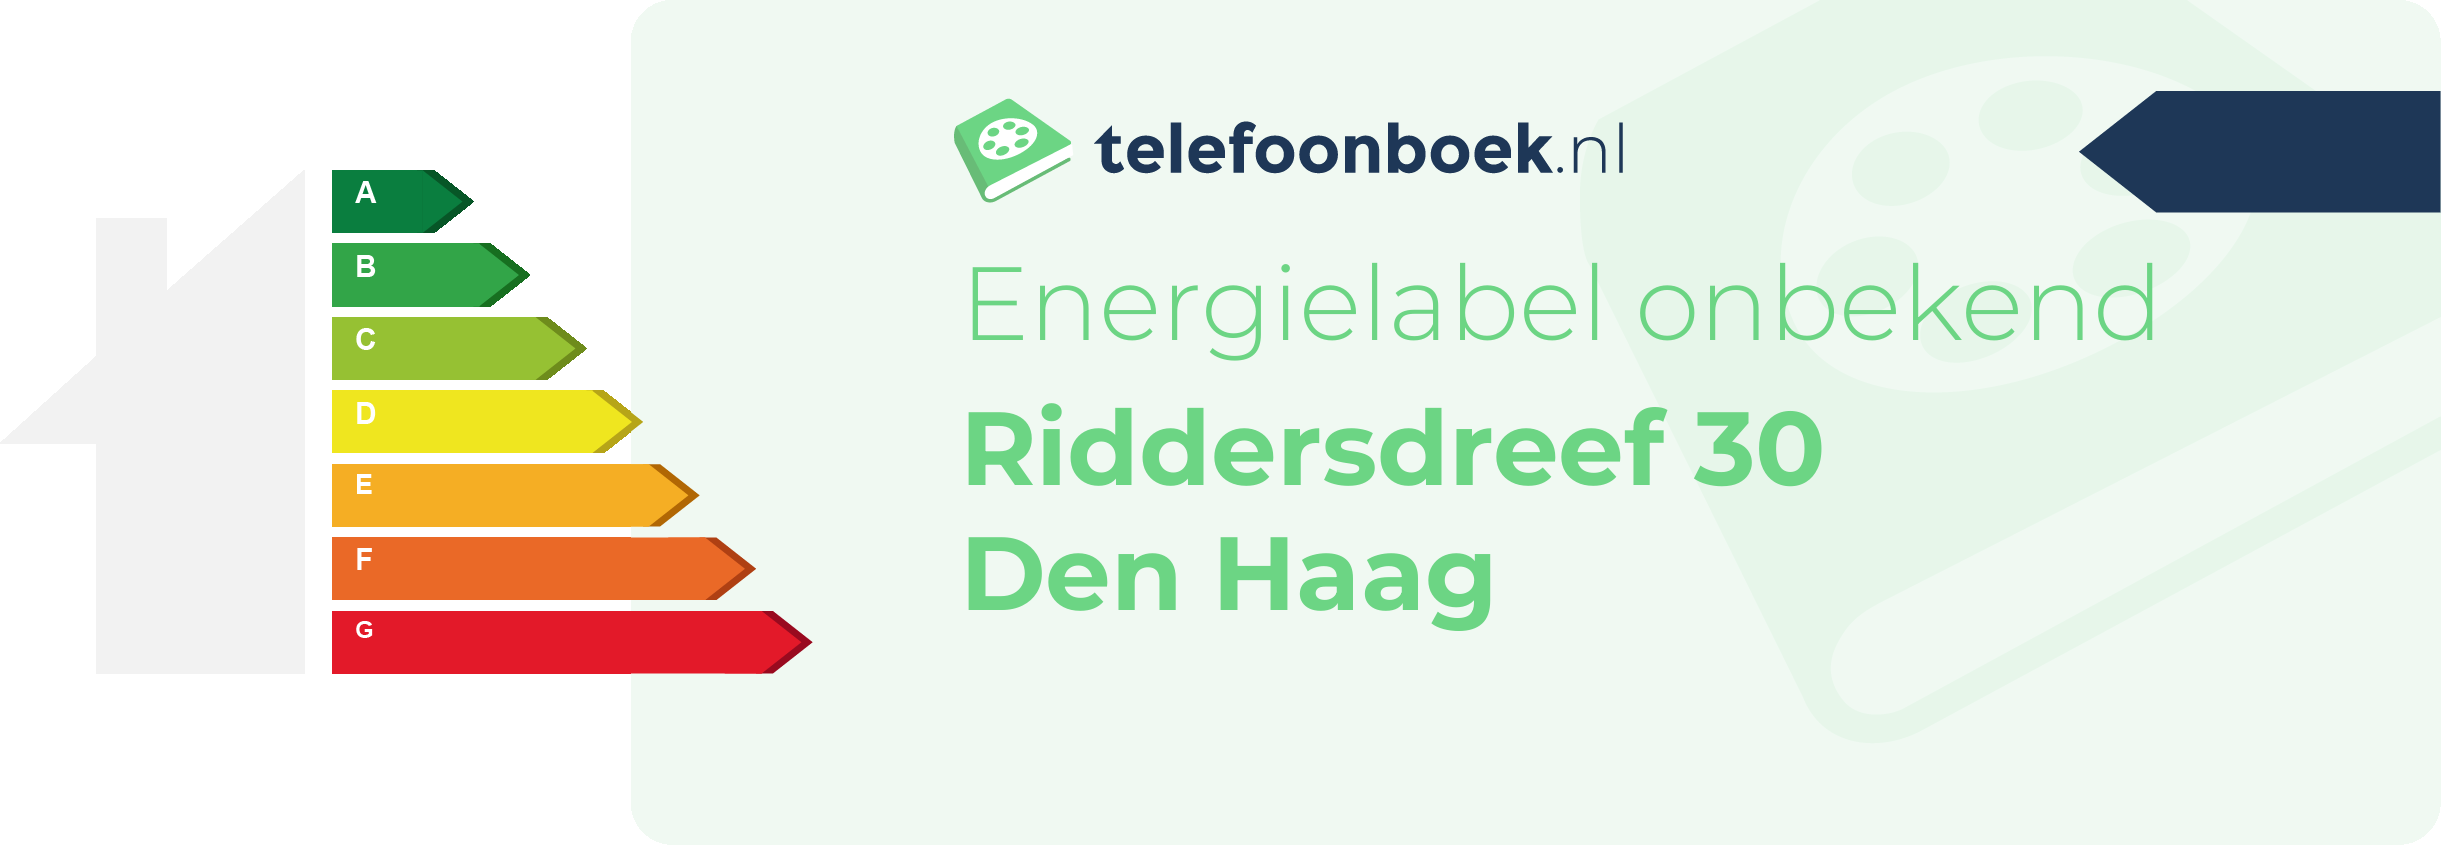 Energielabel Riddersdreef 30 Den Haag